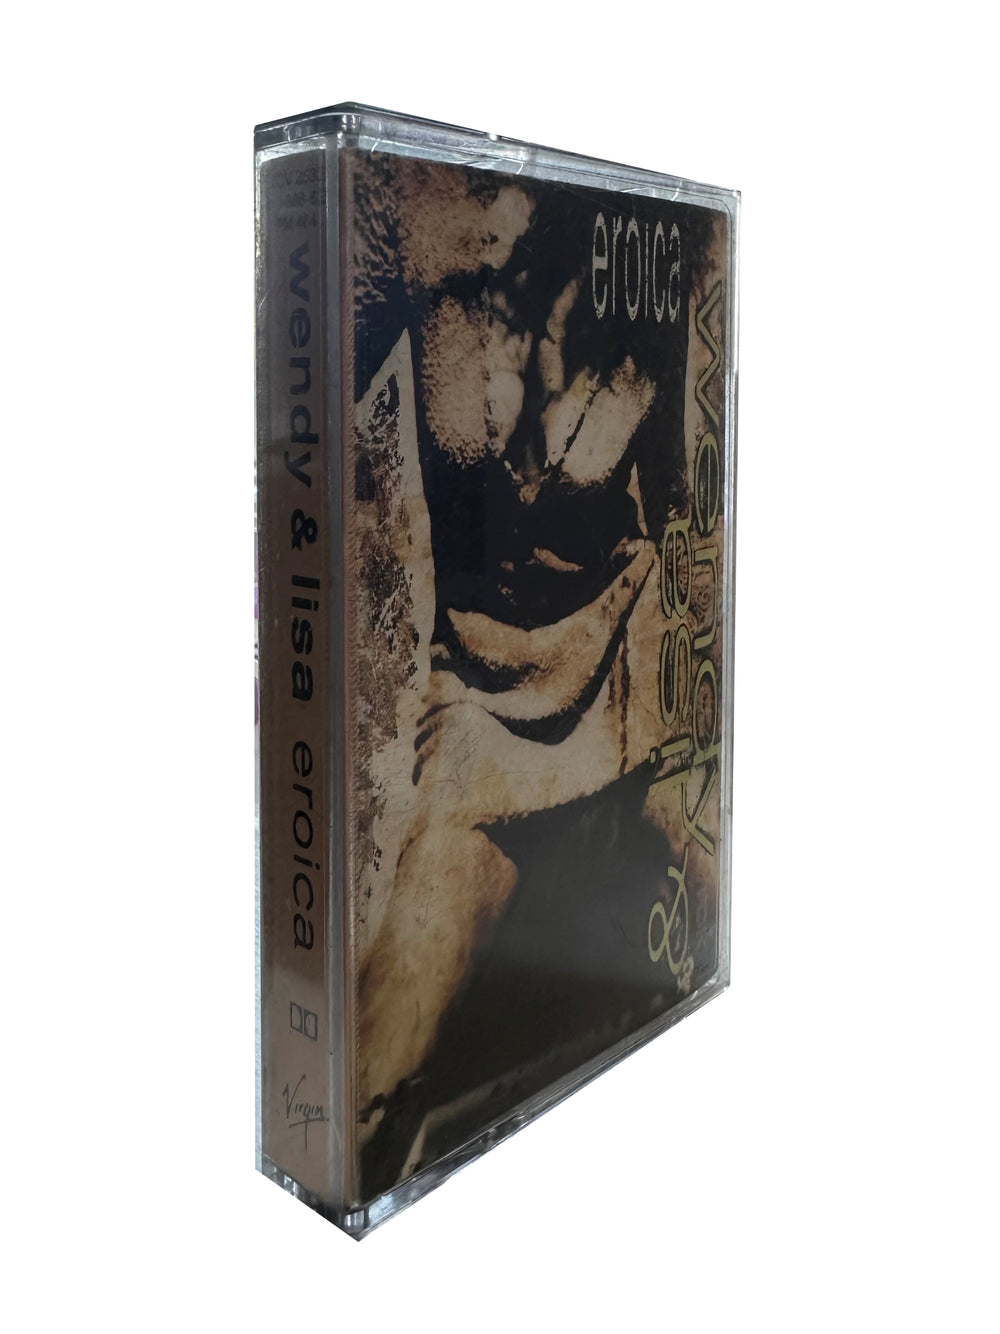 Prince - Wendy & Lisa Eroica Cassette Tape Album UK Preloved: 1990